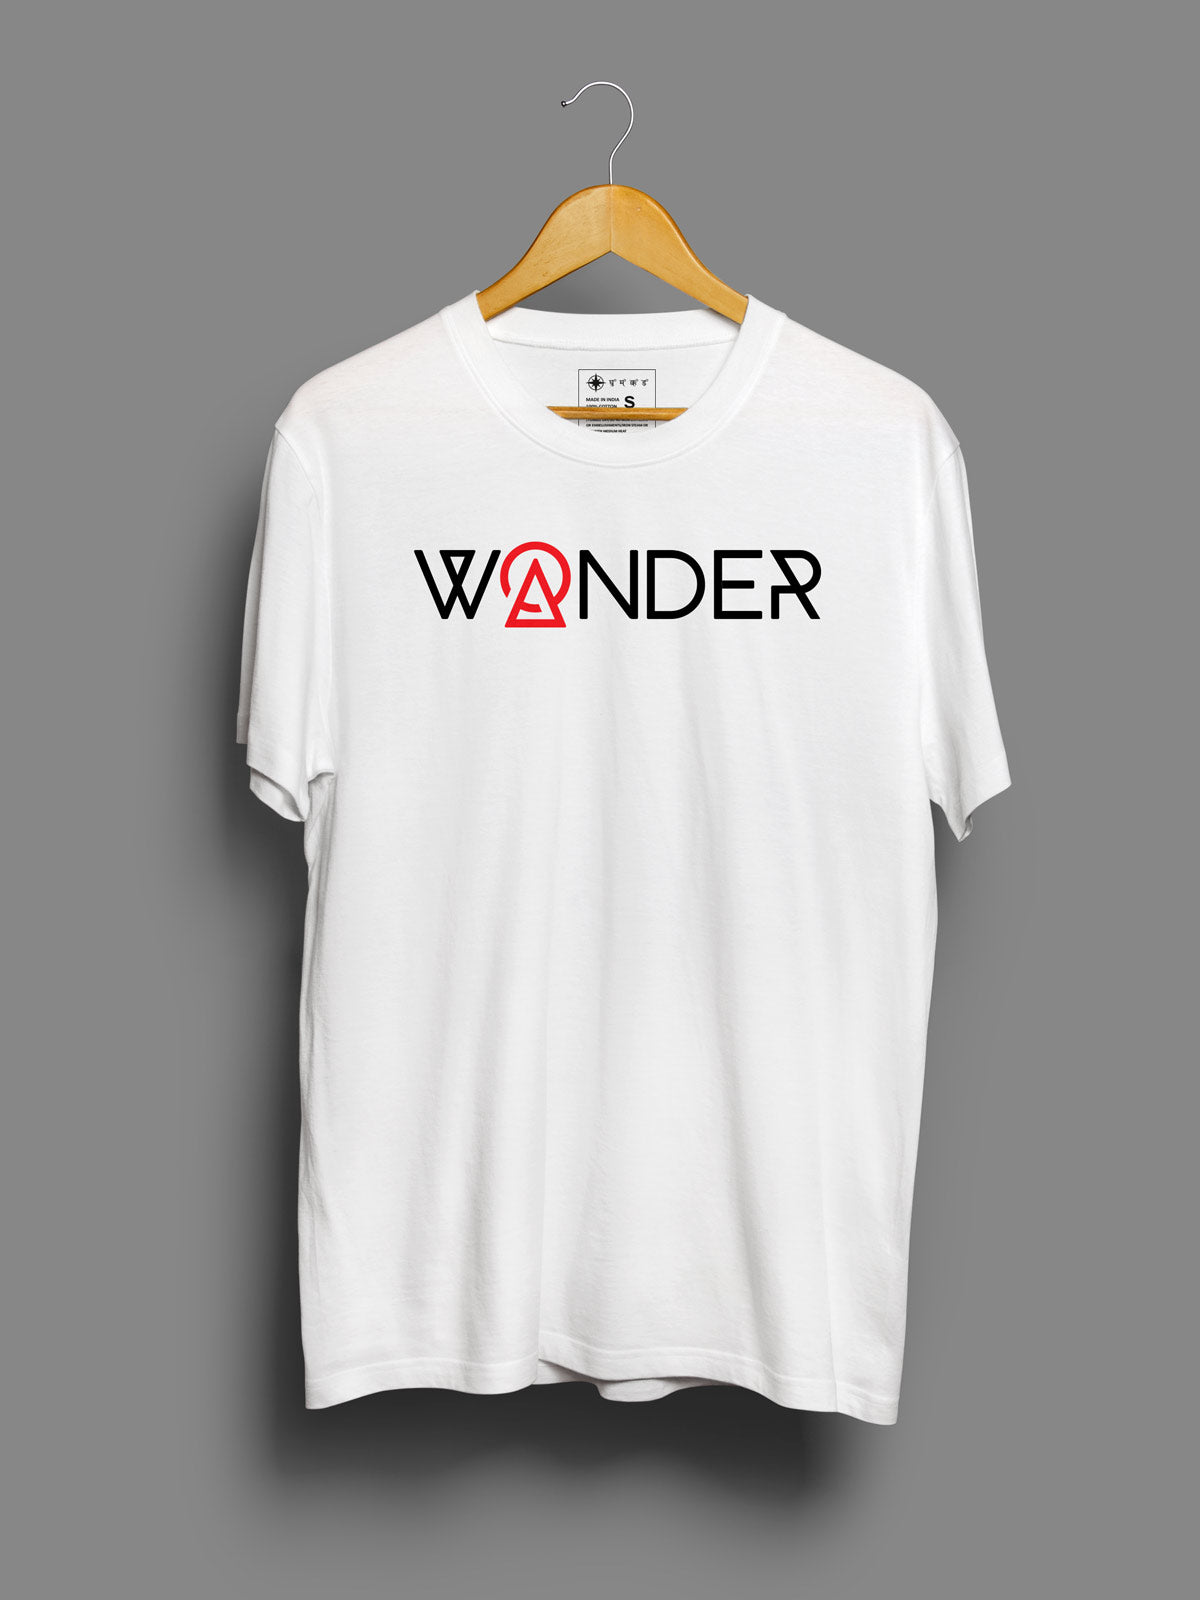 Wonder-Wander-printed-t-shirt-for-men  by Ghumakkad